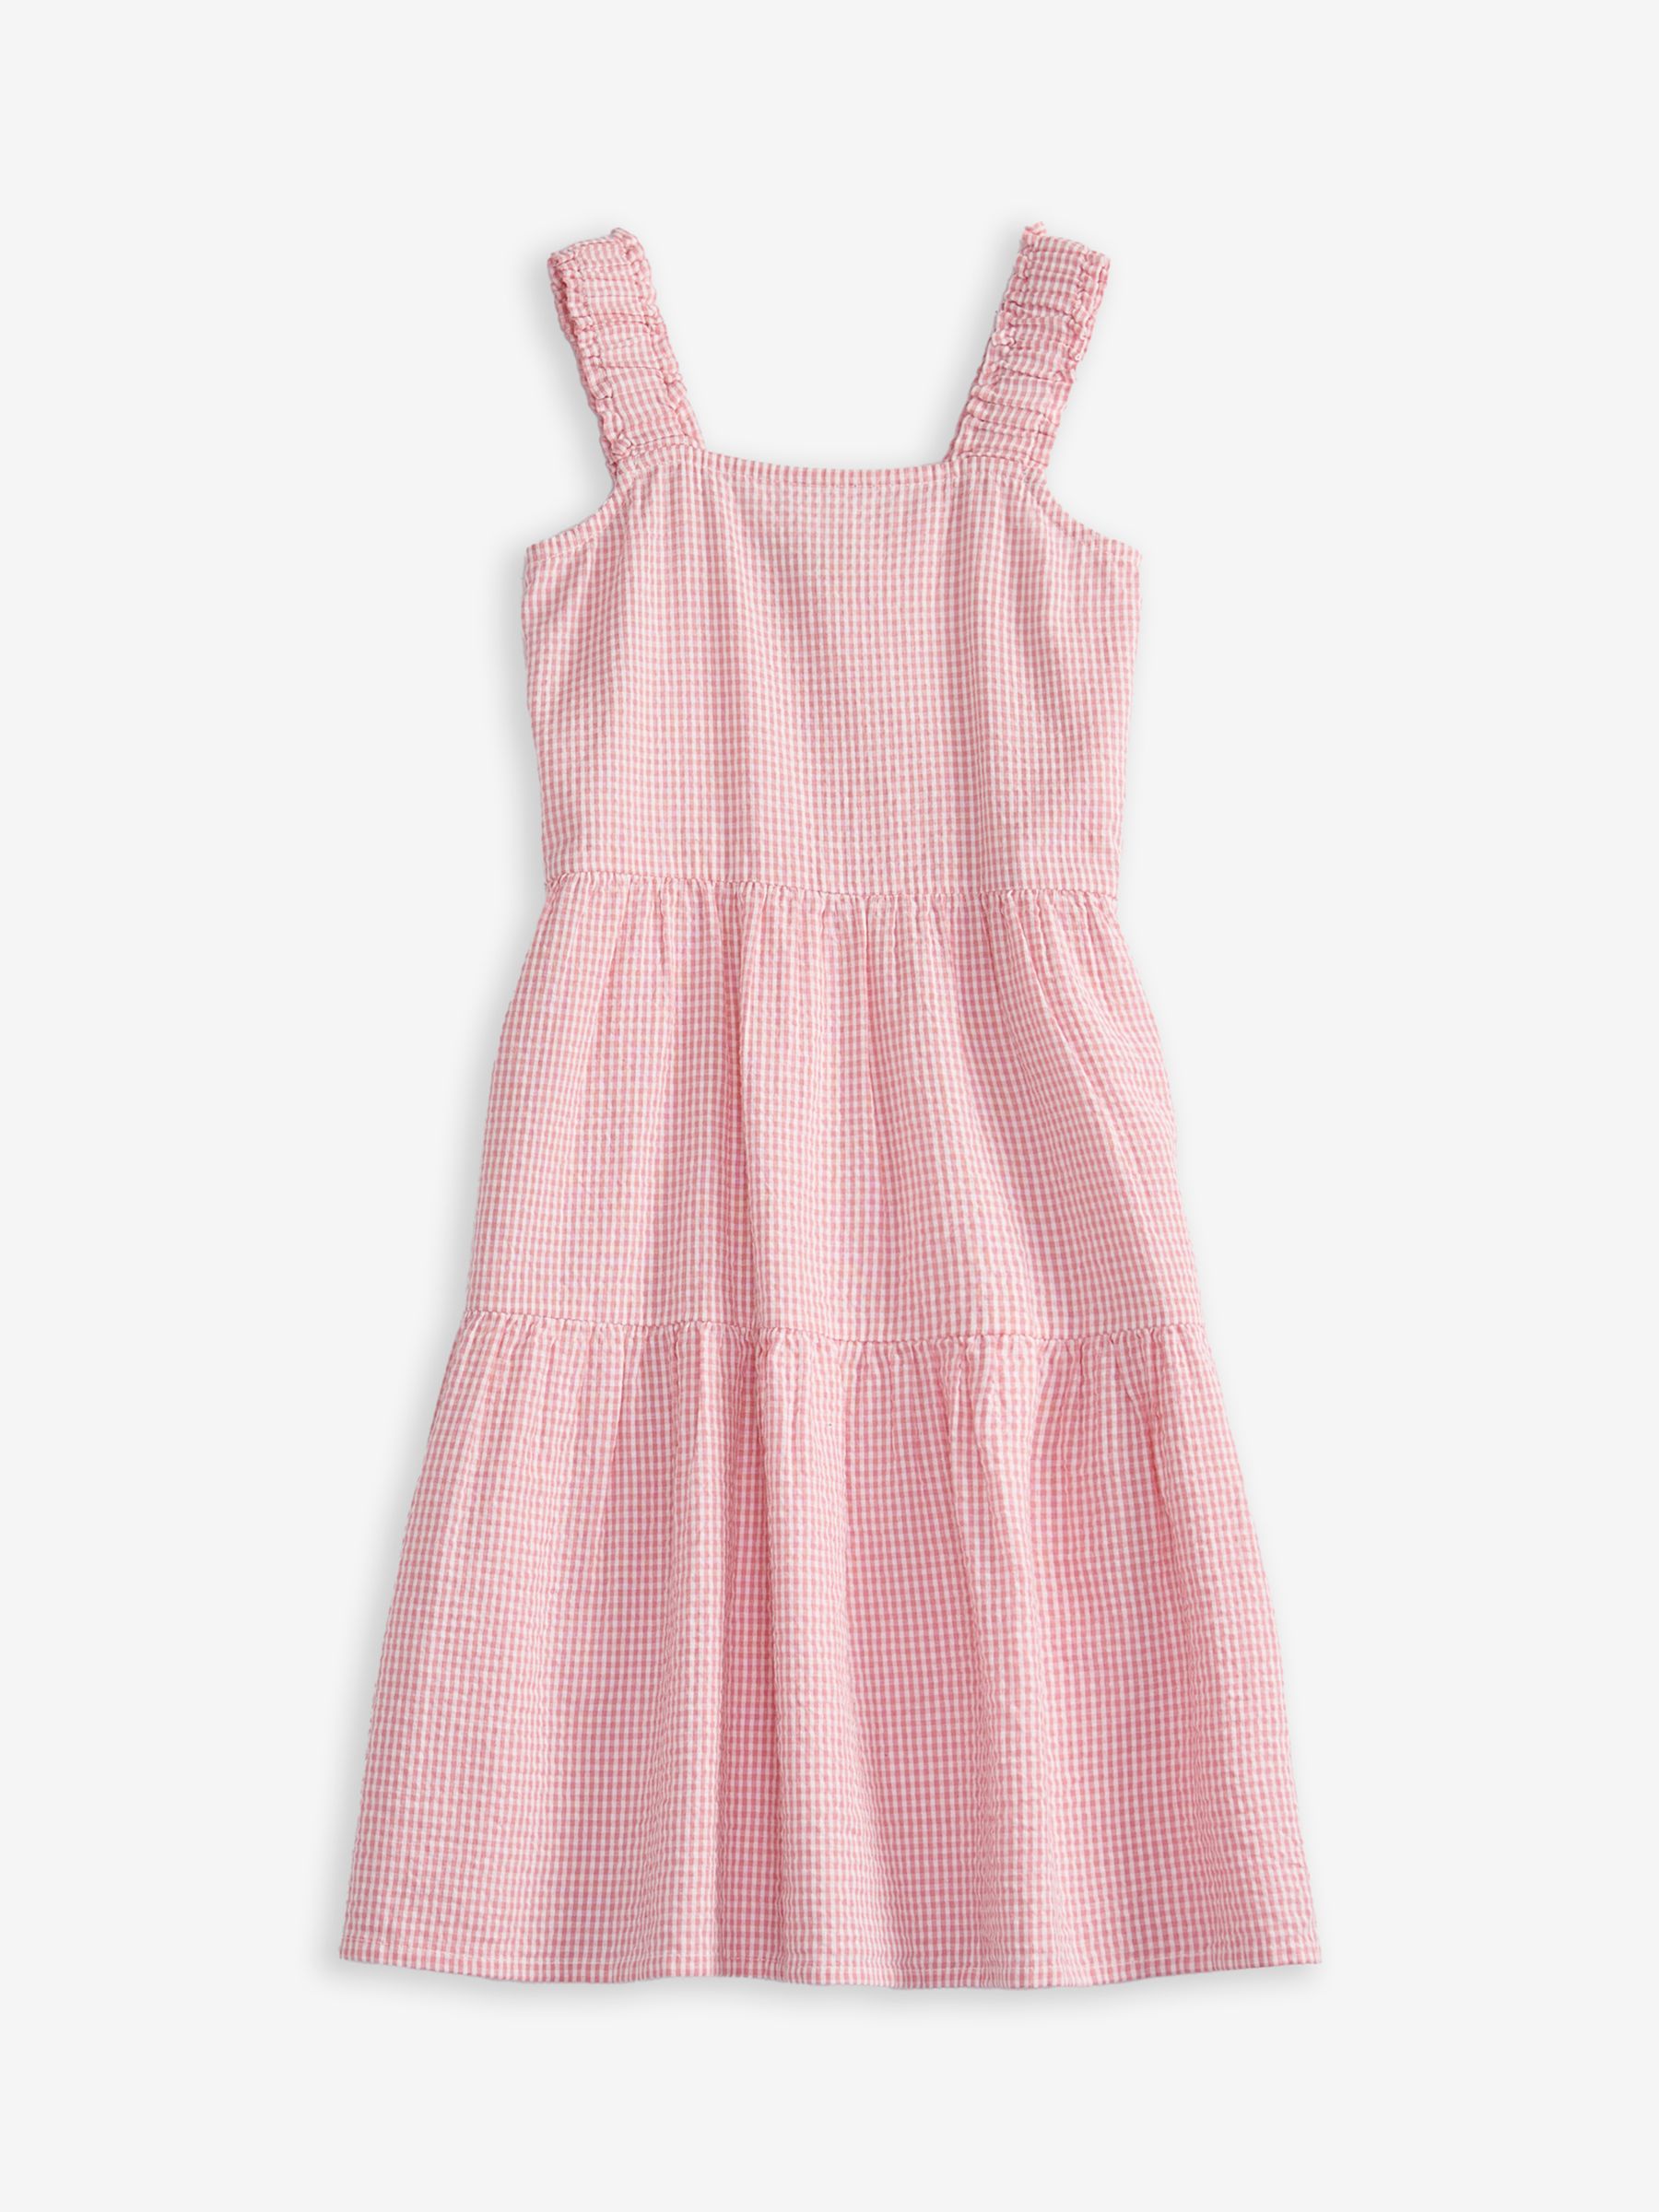 Barbour Kids' Mia Gingham Dress, Pink at John Lewis & Partners